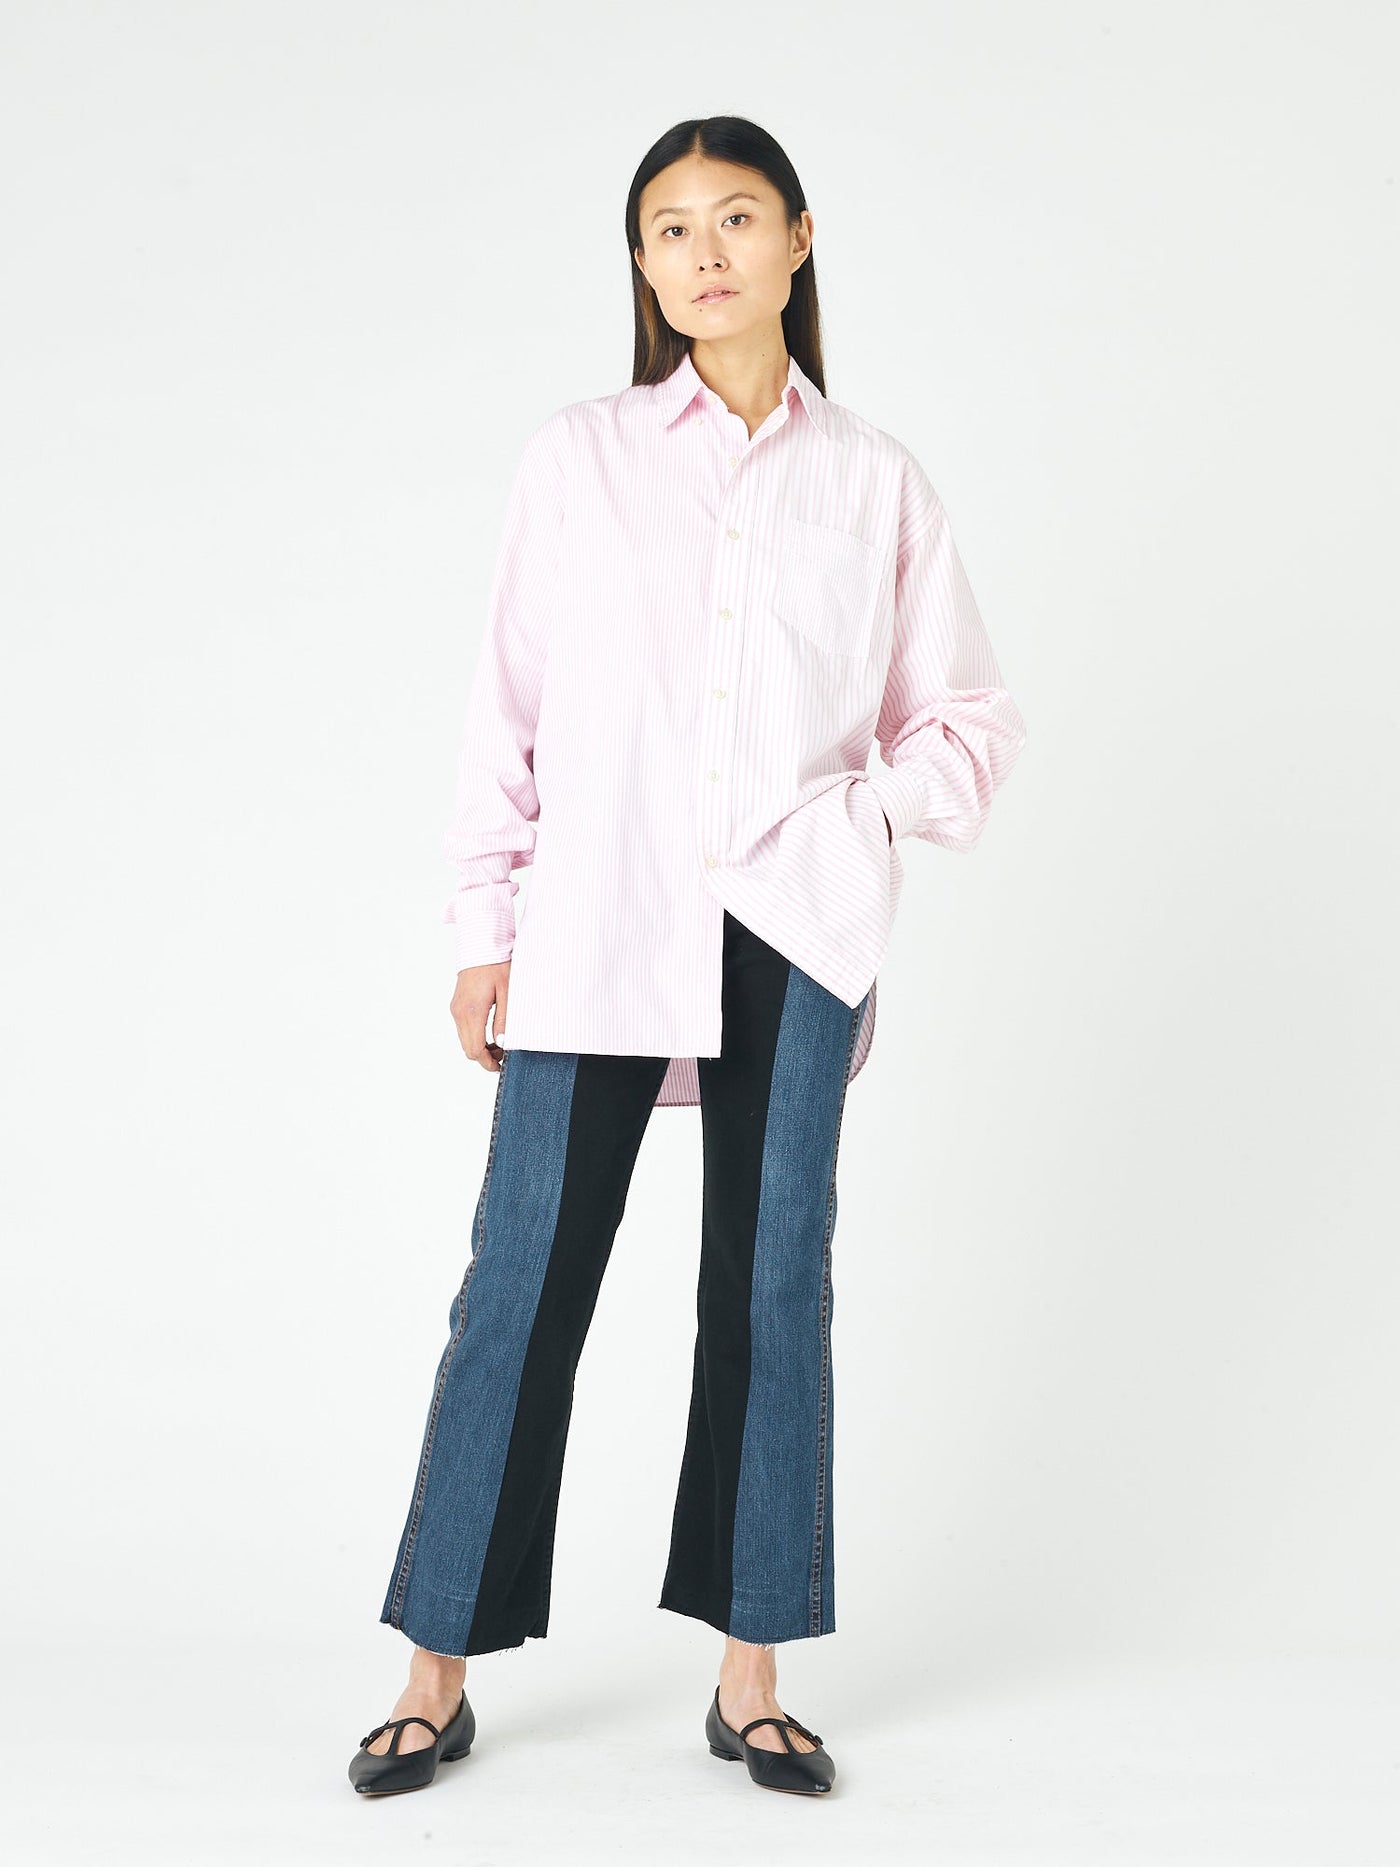 The Diana Cotton Pink Stripe Shirt - E.L.V. Denim